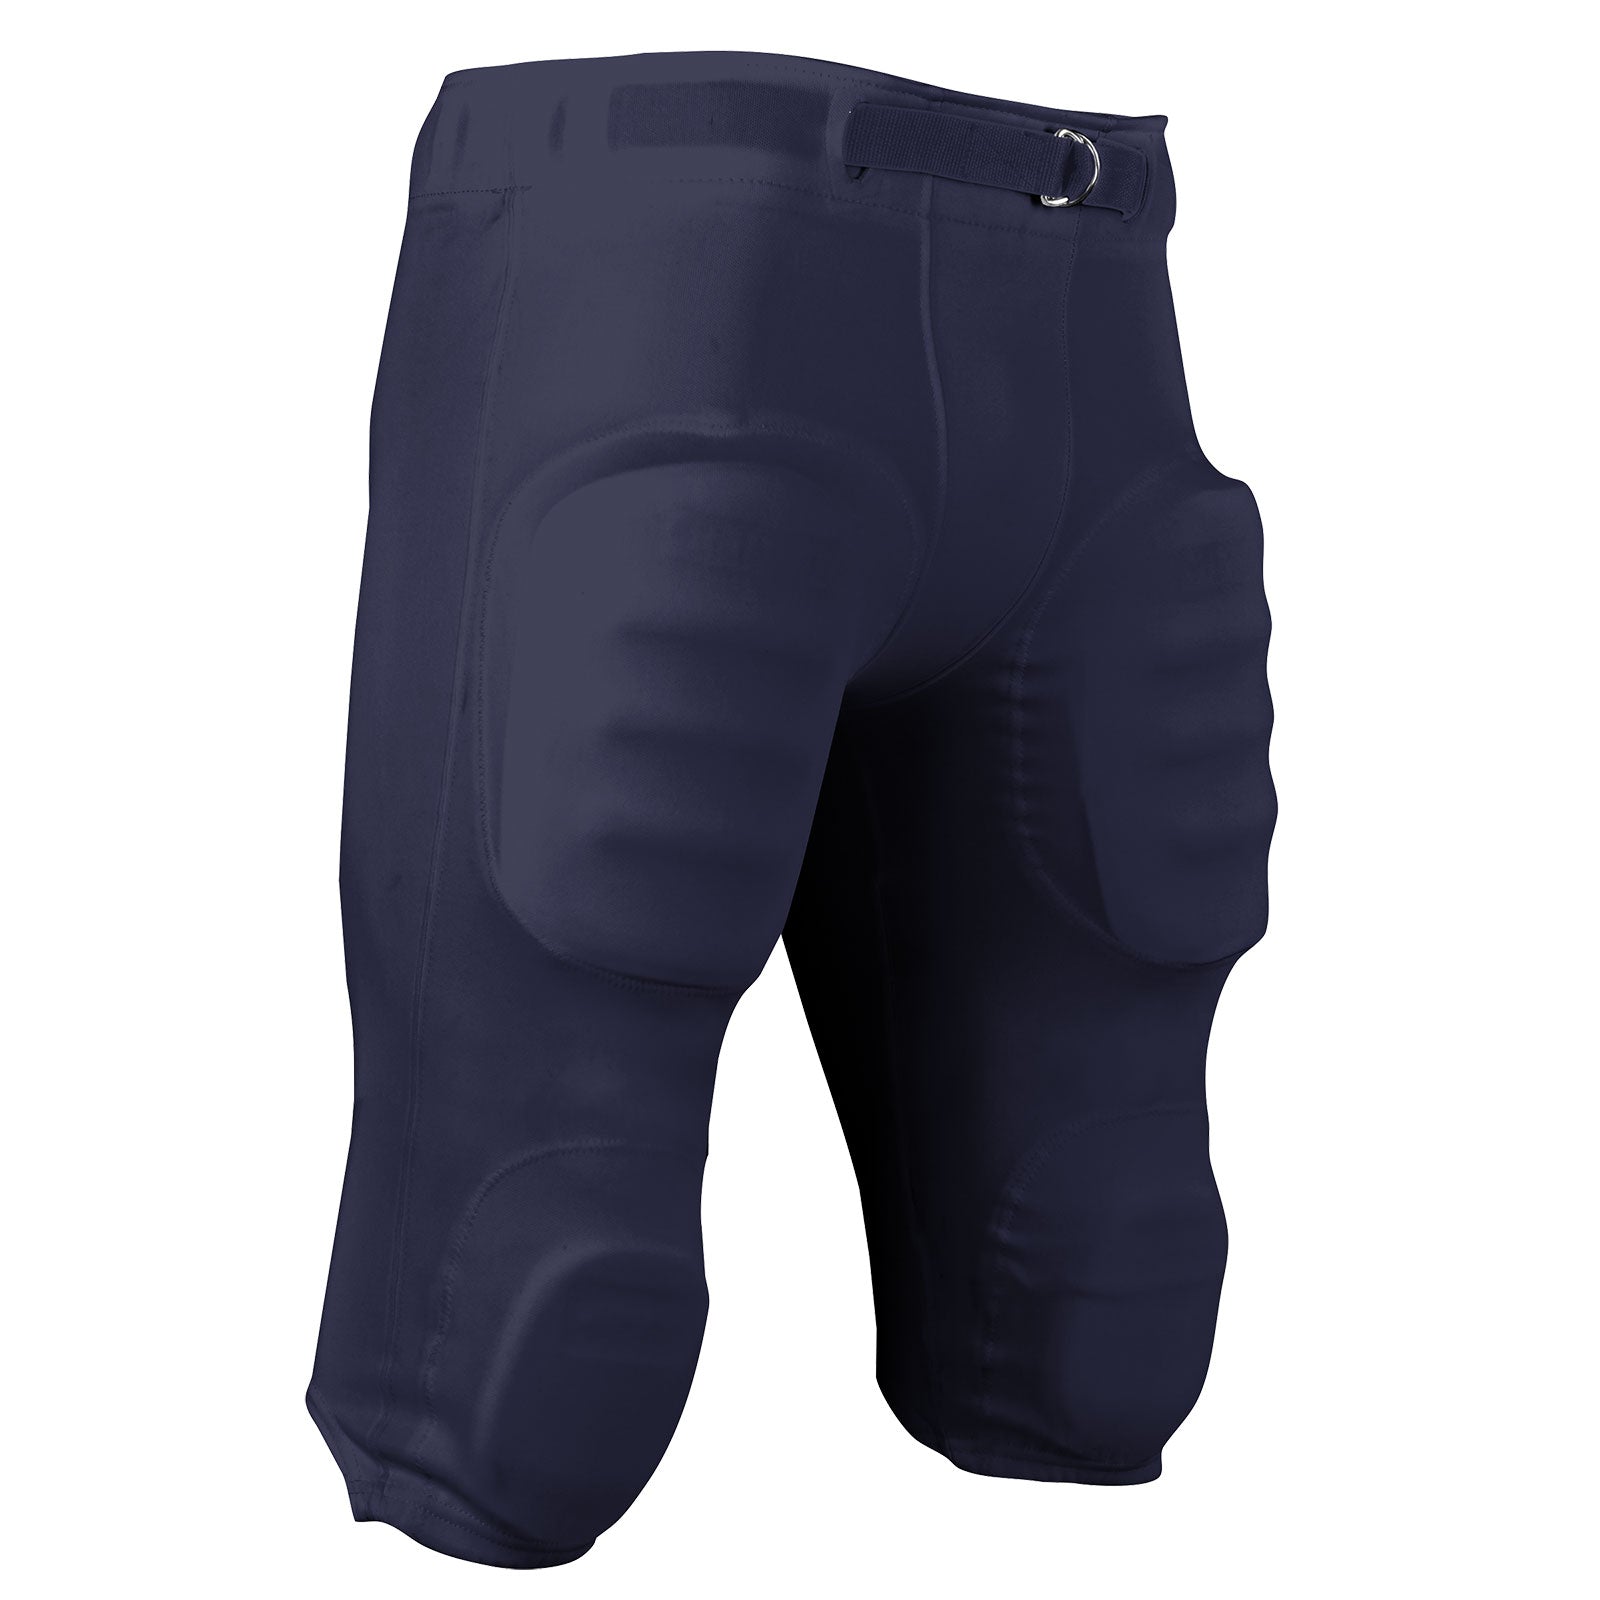 Terminator 2 Integrated Football Game Pants, Adult X-Large, Navy -  Walmart.com